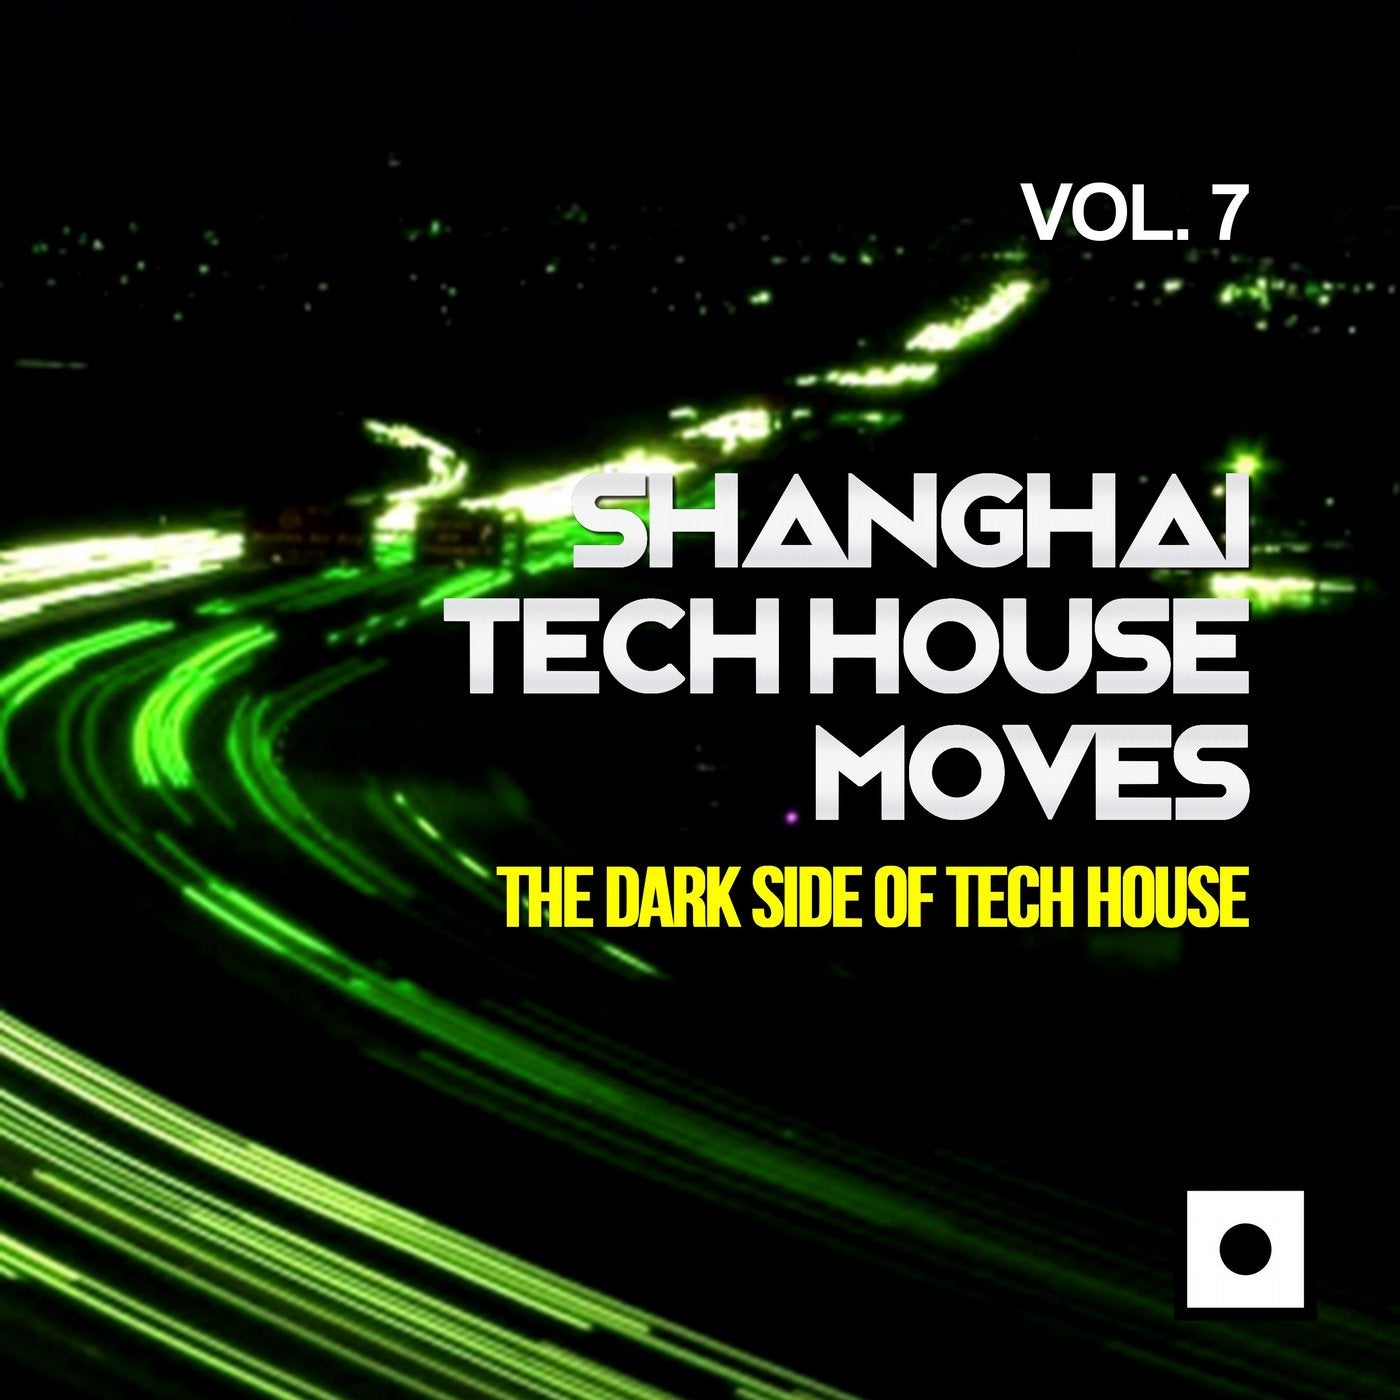 Shanghai Tech House Moves, Vol. 7 (The Dark Side Of Tech House)